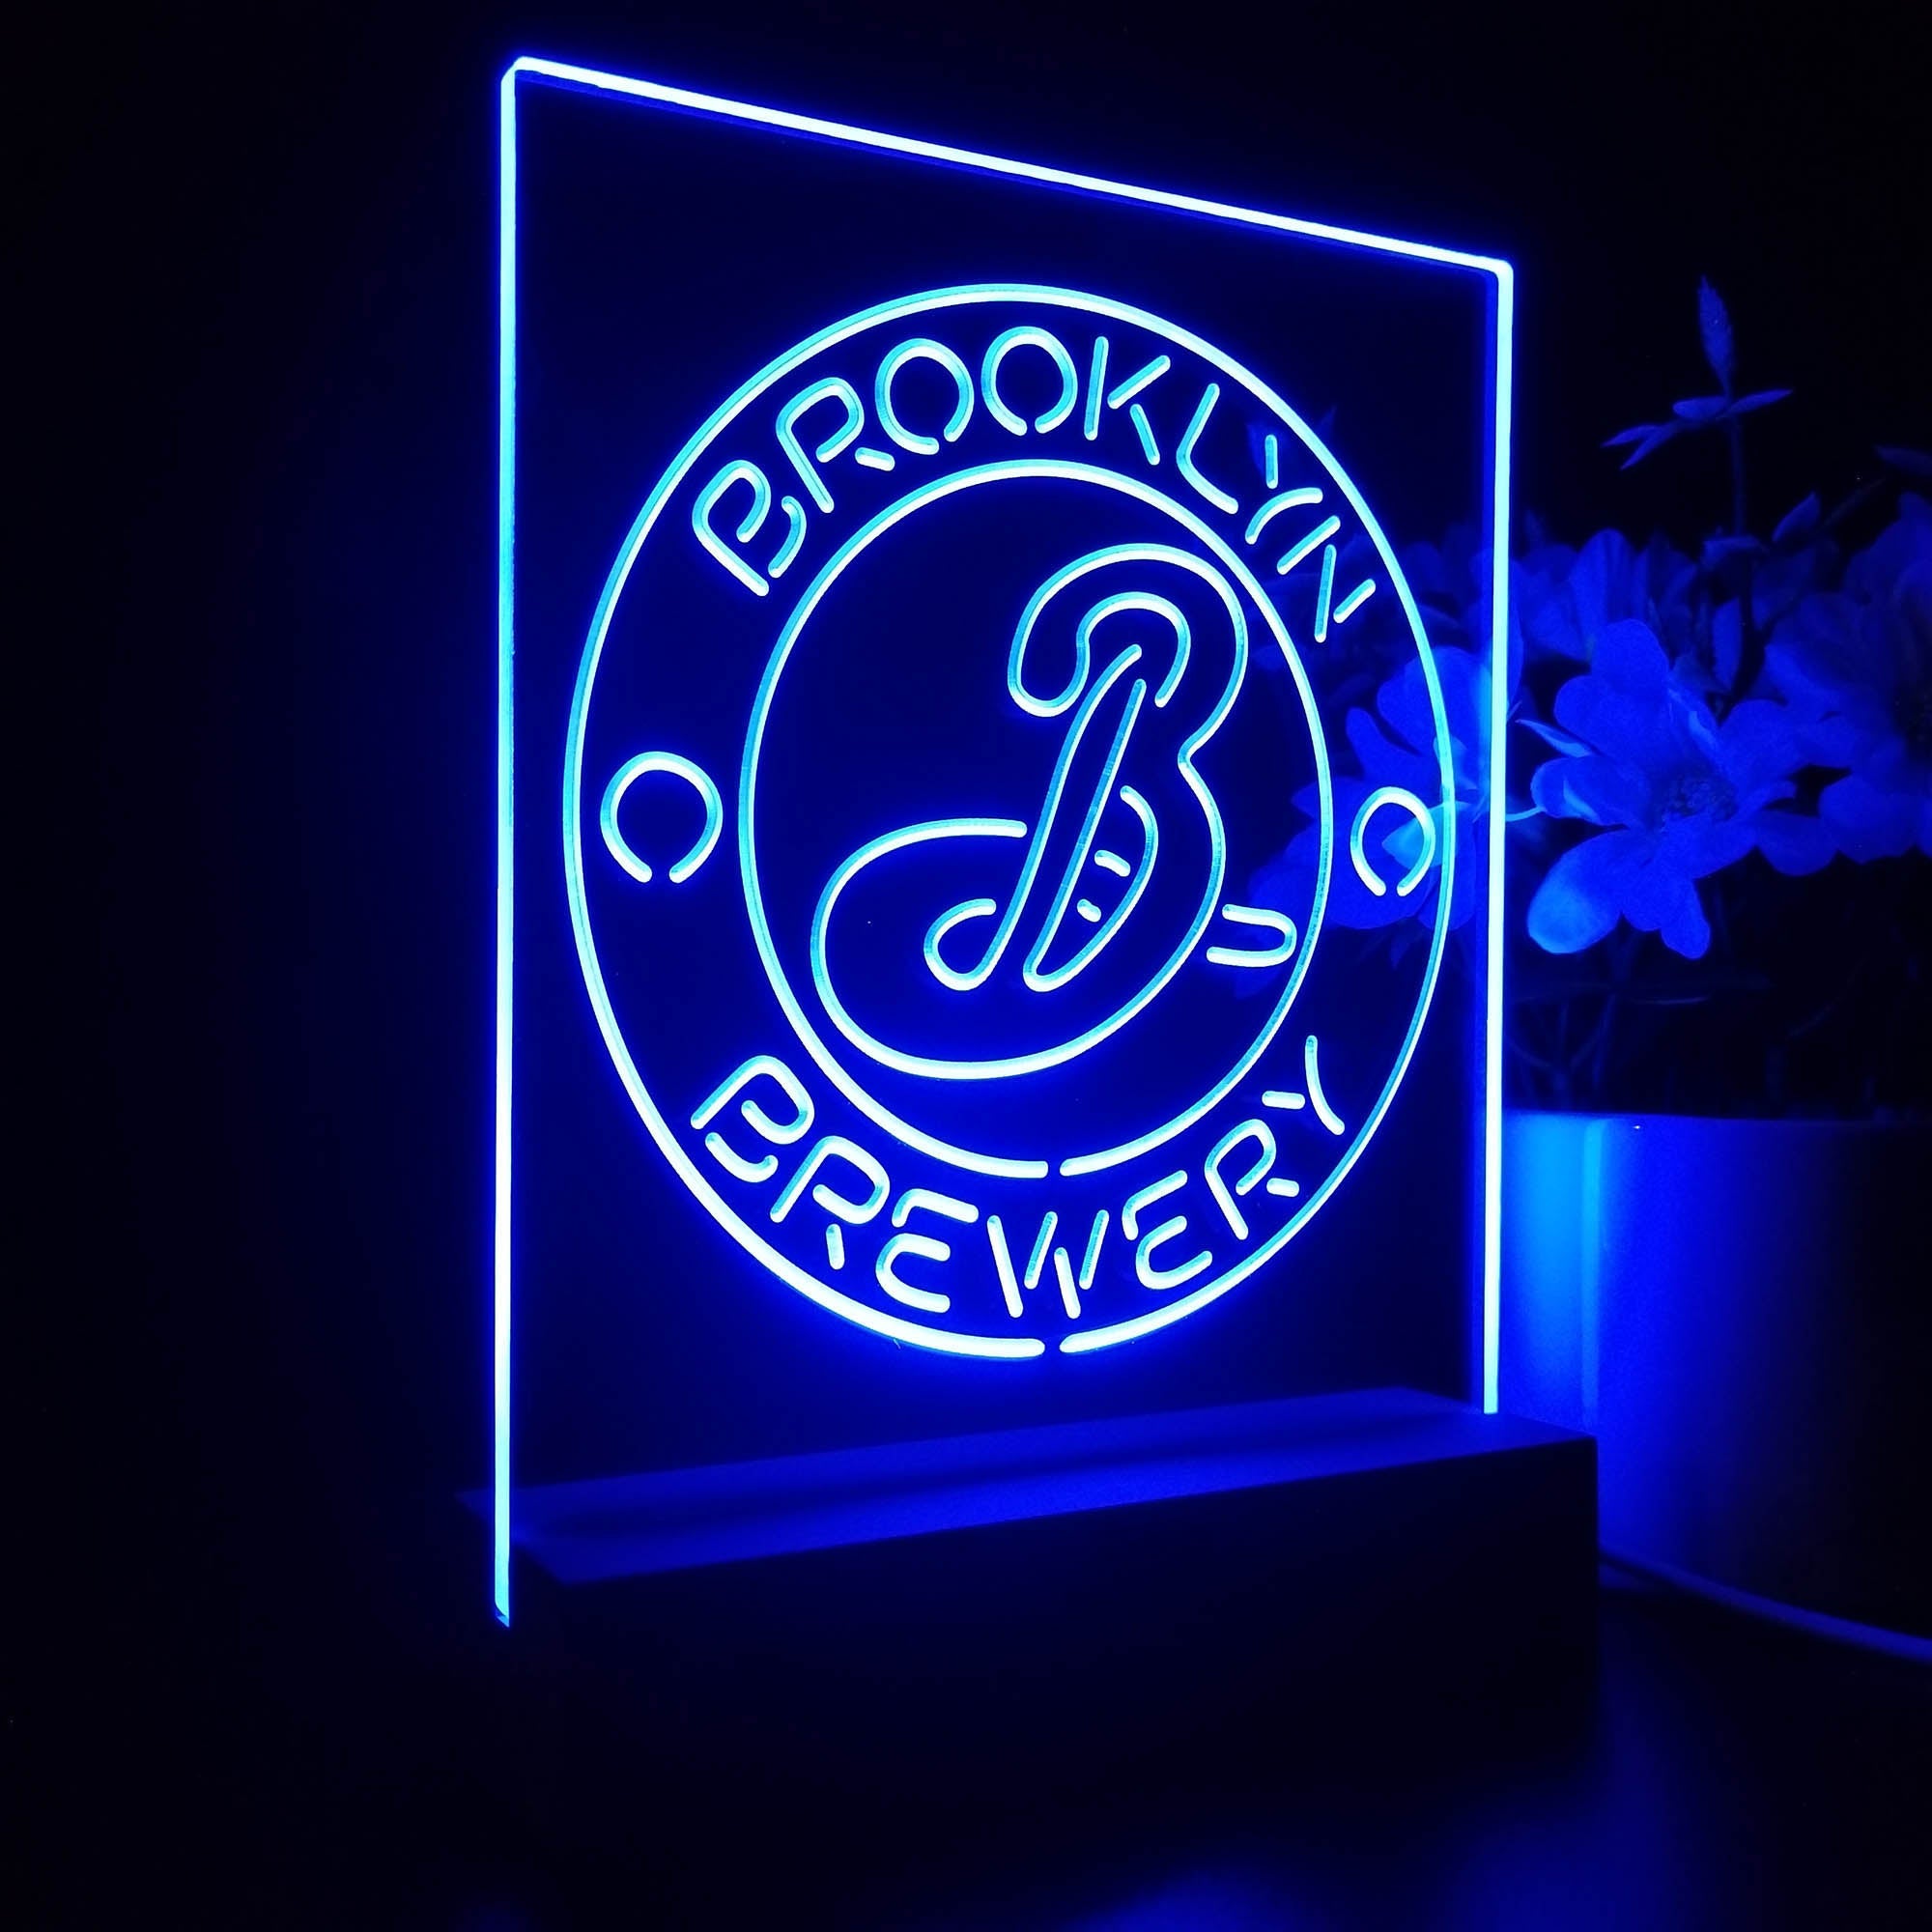 Brooklyn Brewery Night Light LED Sign